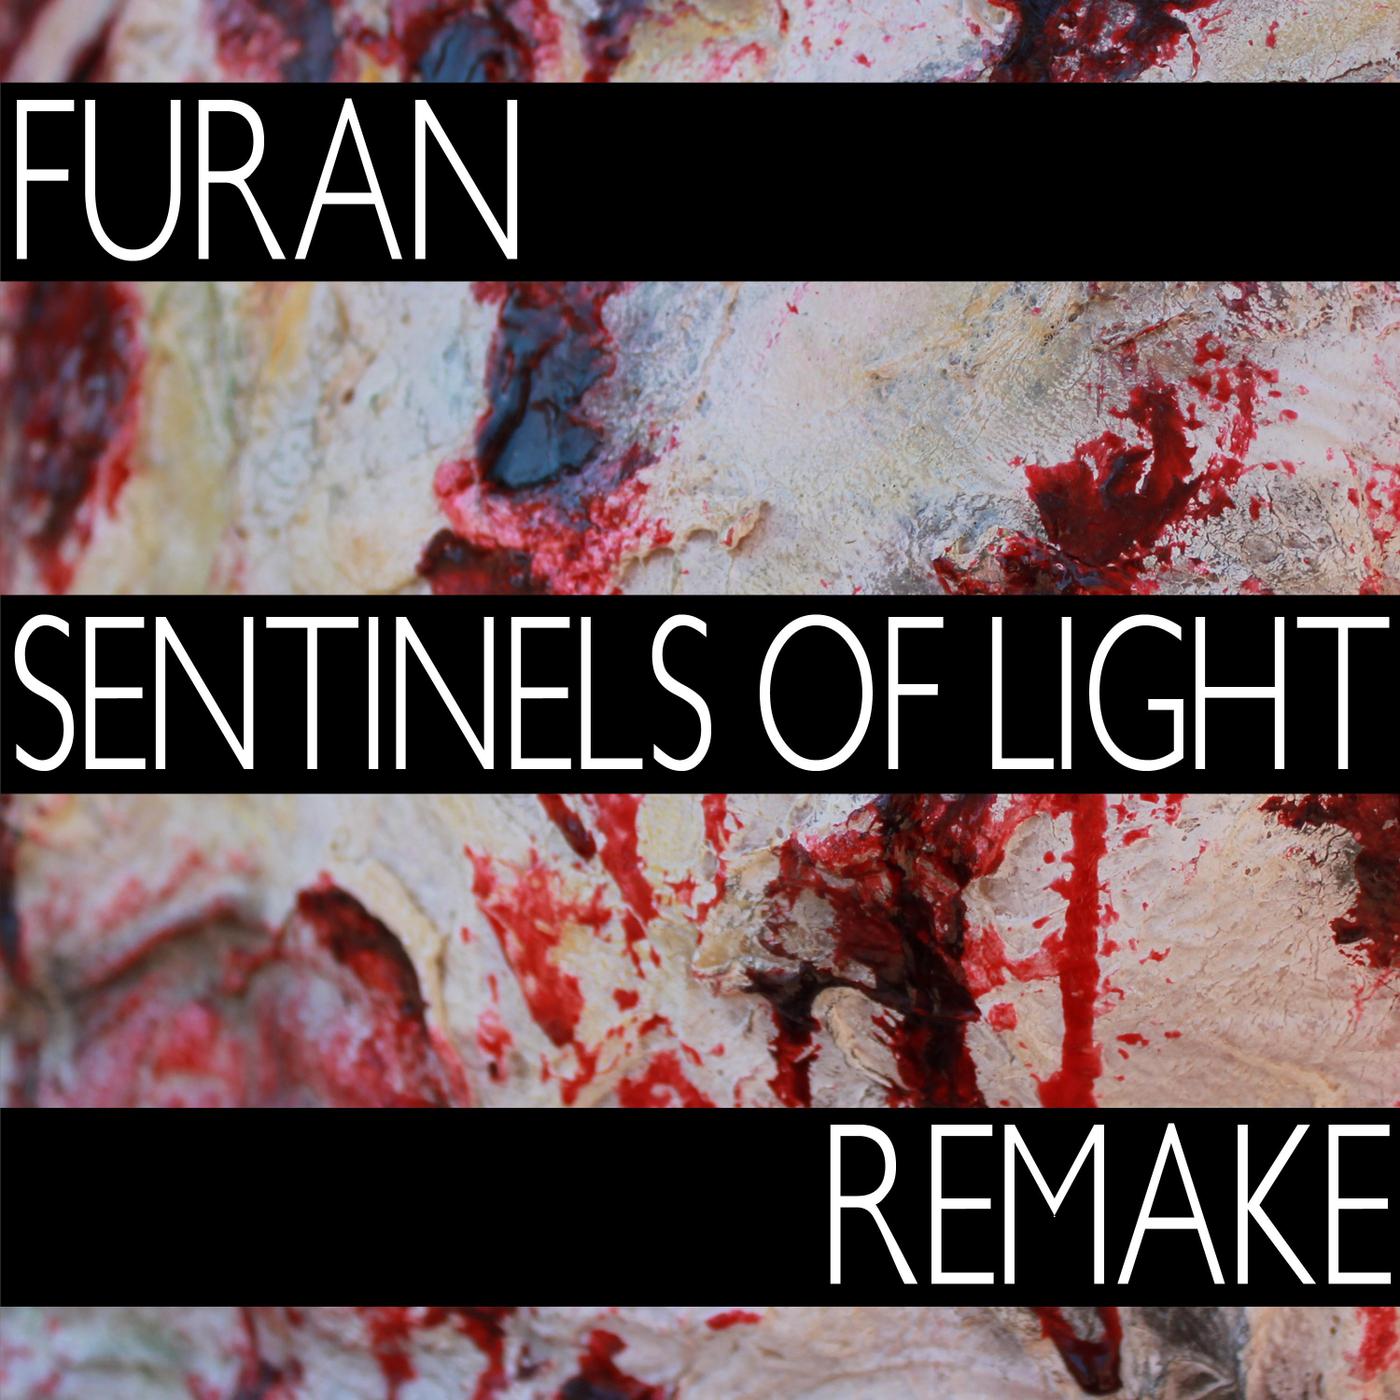 Furan - Sentinels of Light (Remake)